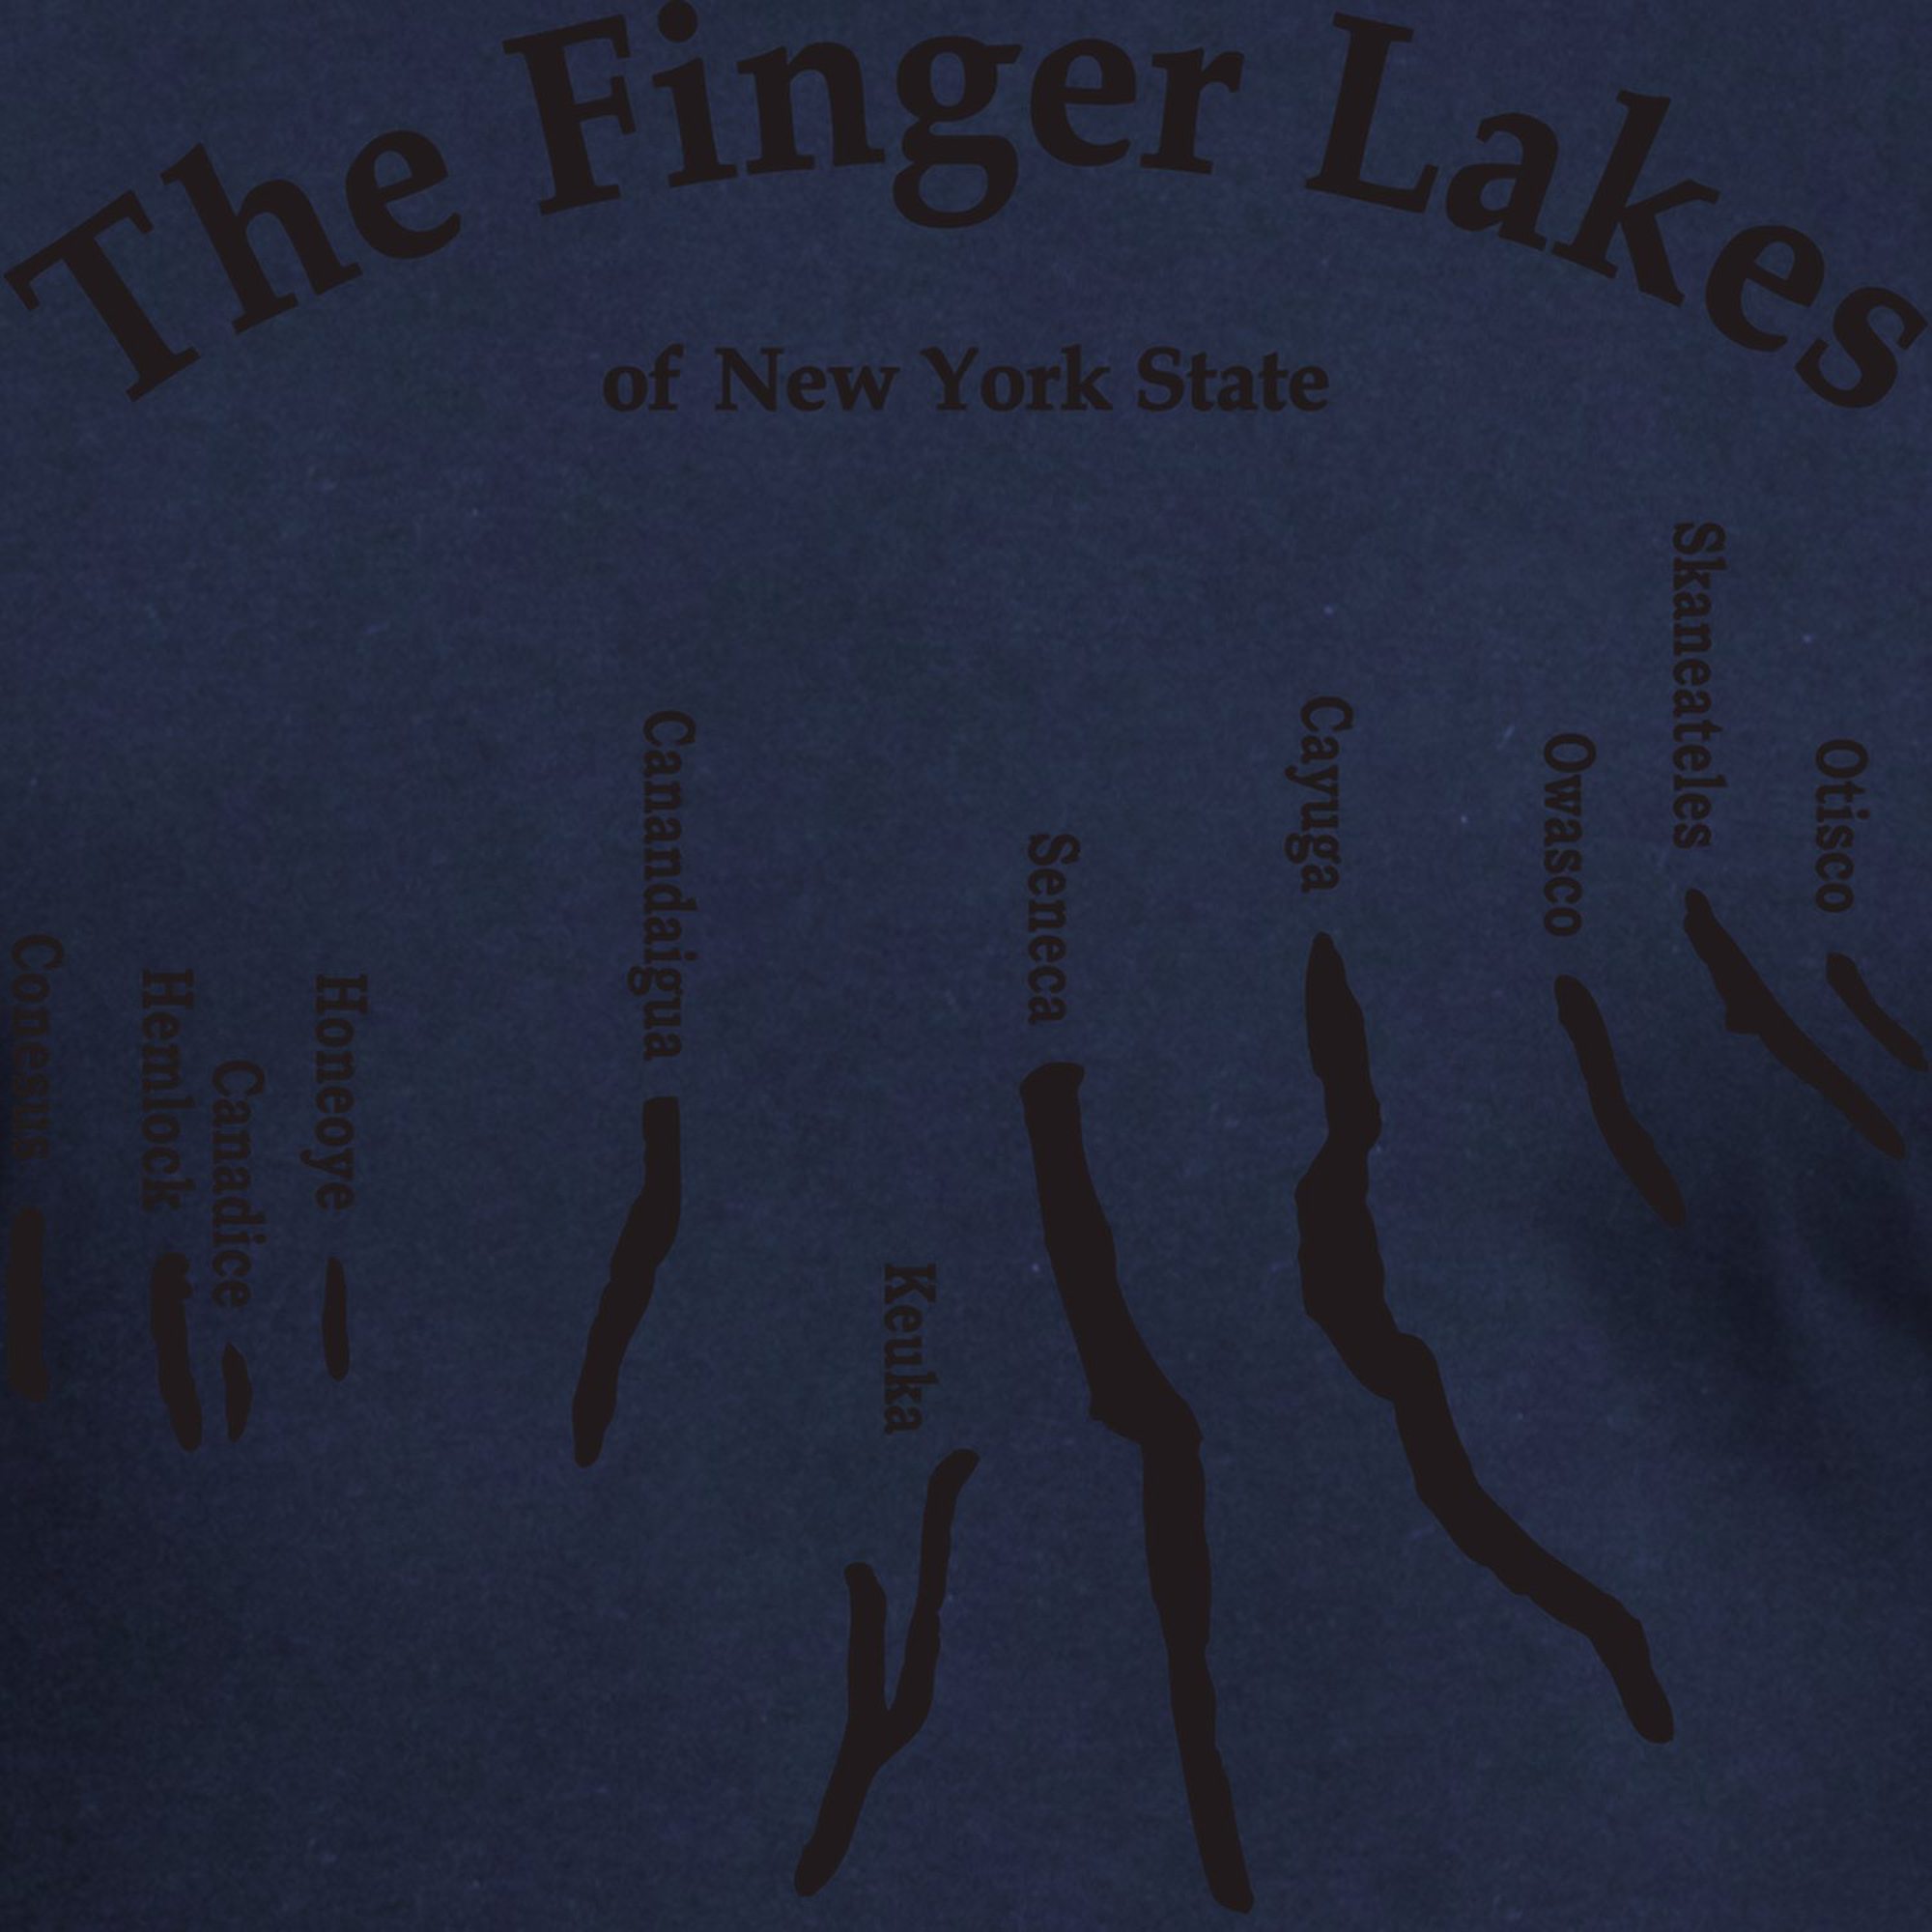 CafePress - Finger Lakes 2 Logo T Shirt - Men's Fitted T-Shirt - image 3 of 4